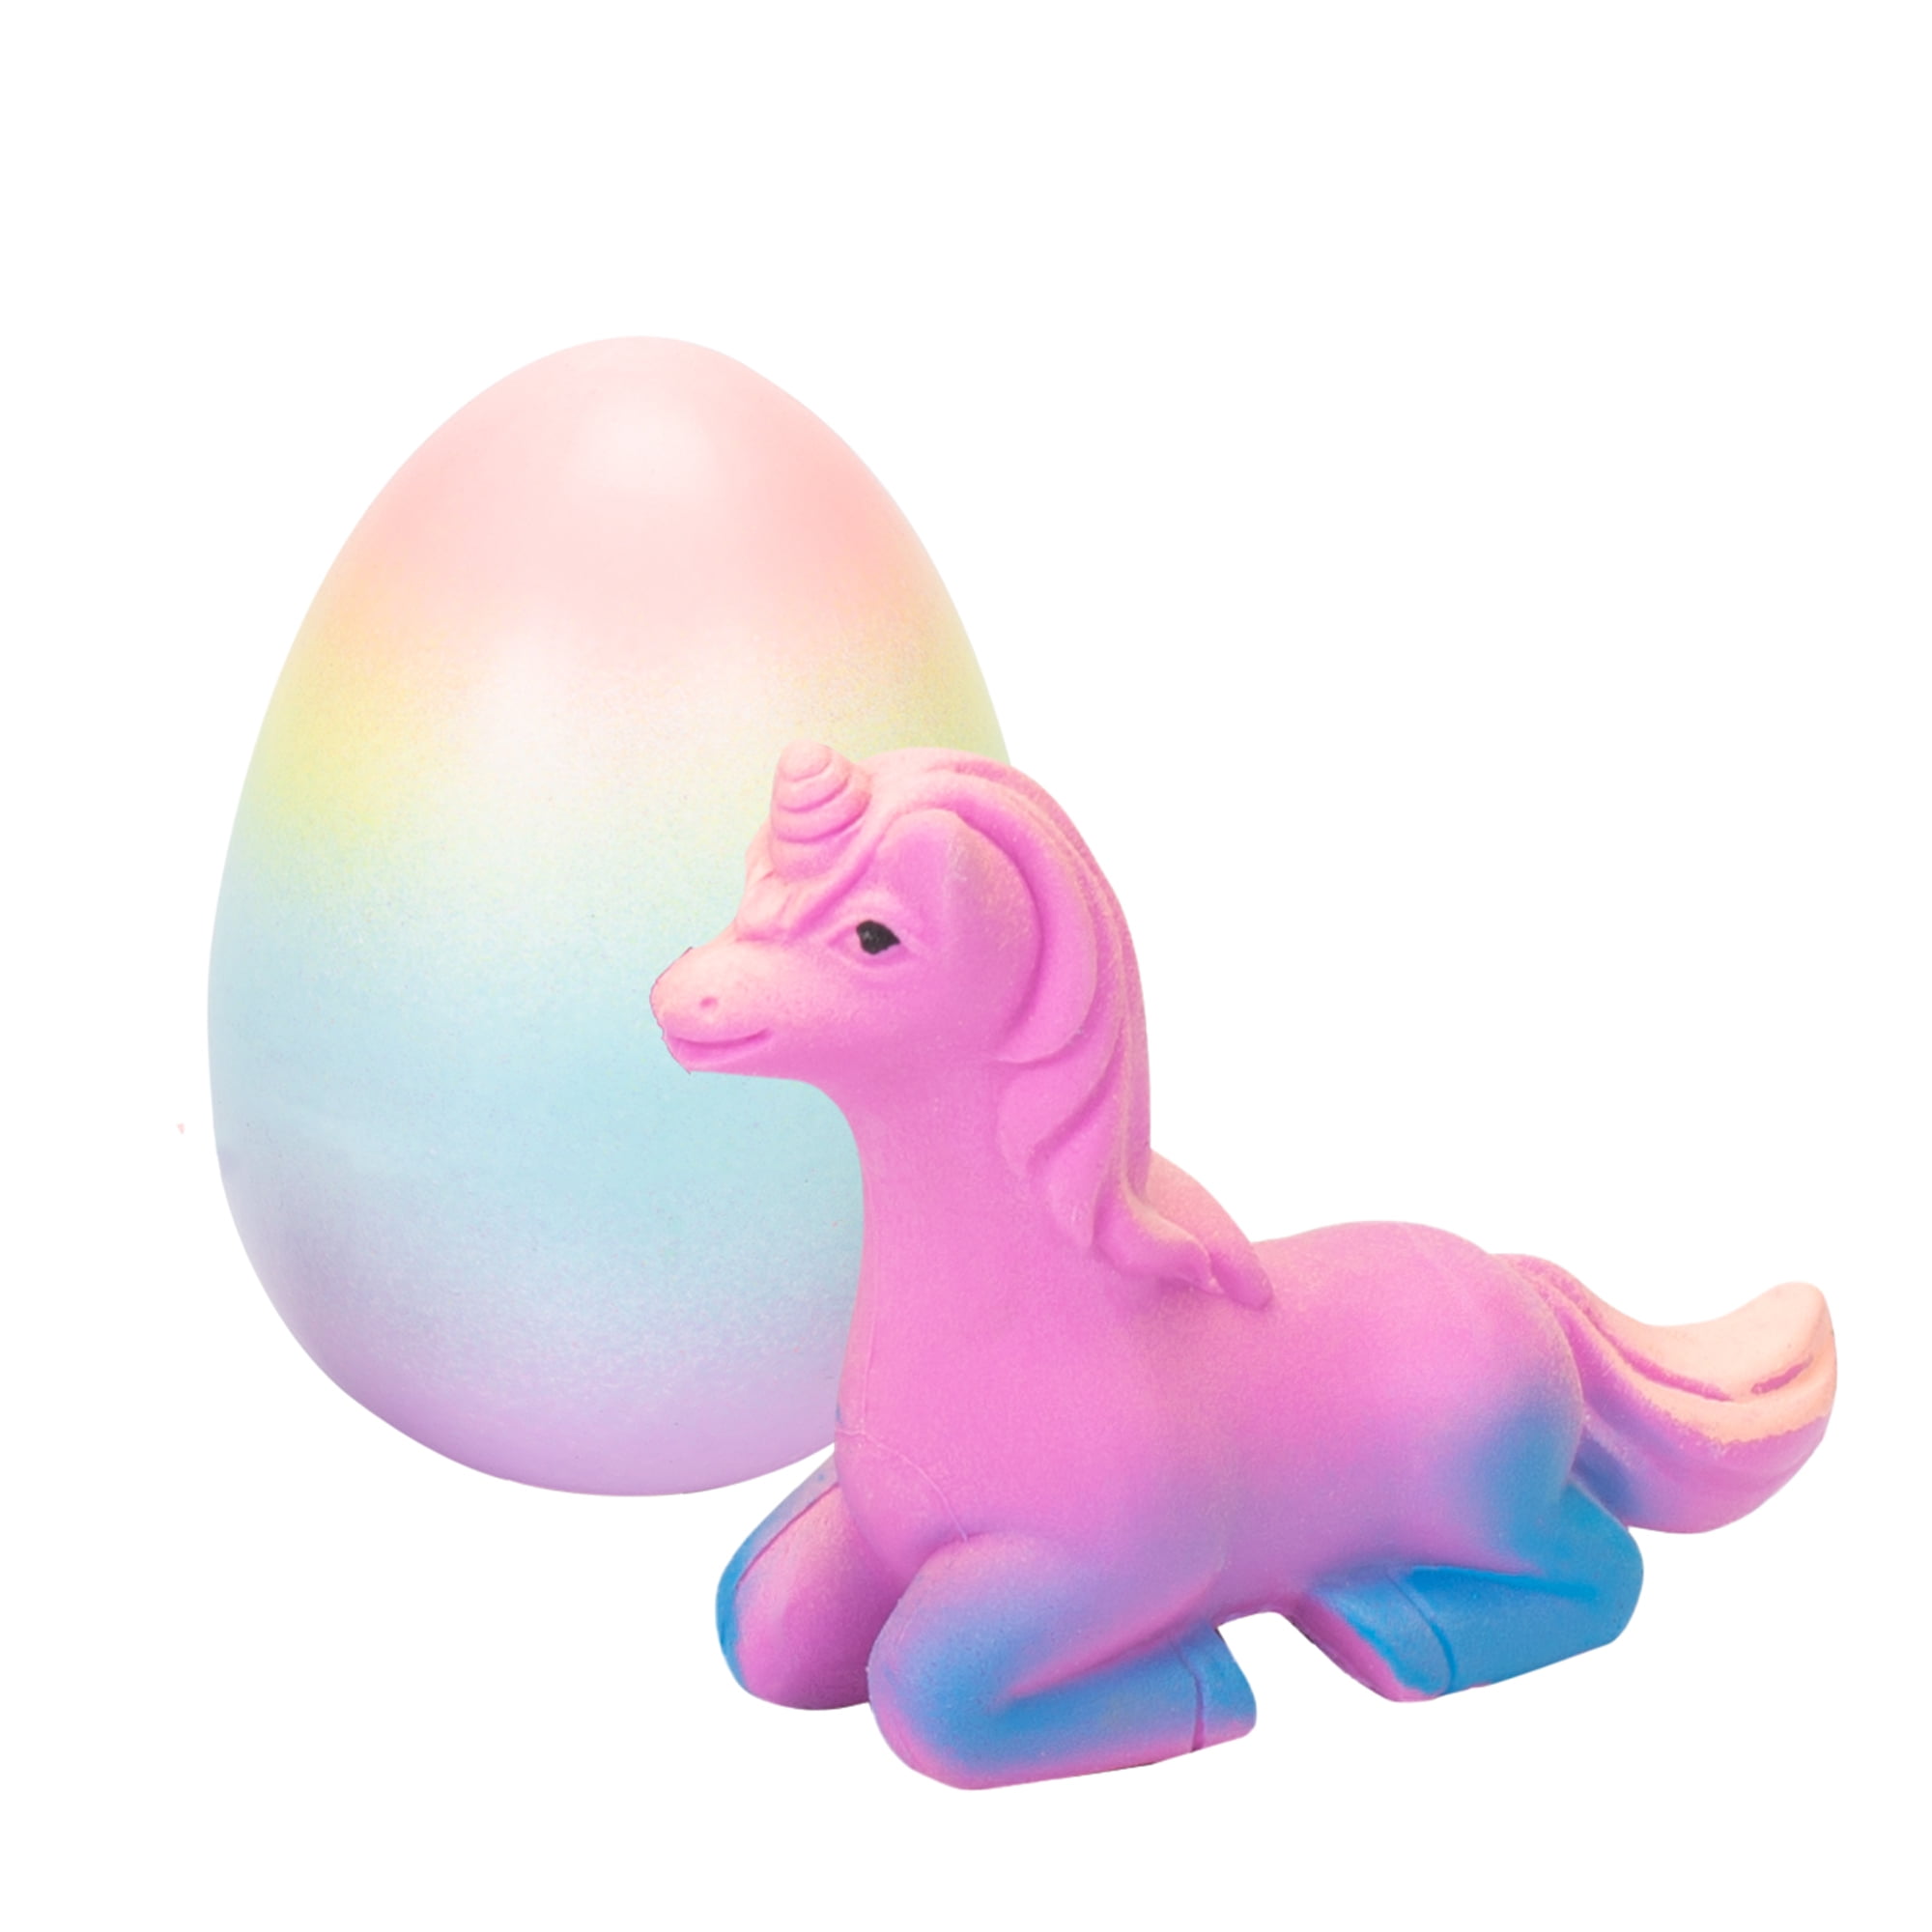 HGL Rainbow Unicorn Grow Egg fun grow Kit Educational  For children's fun xmas 